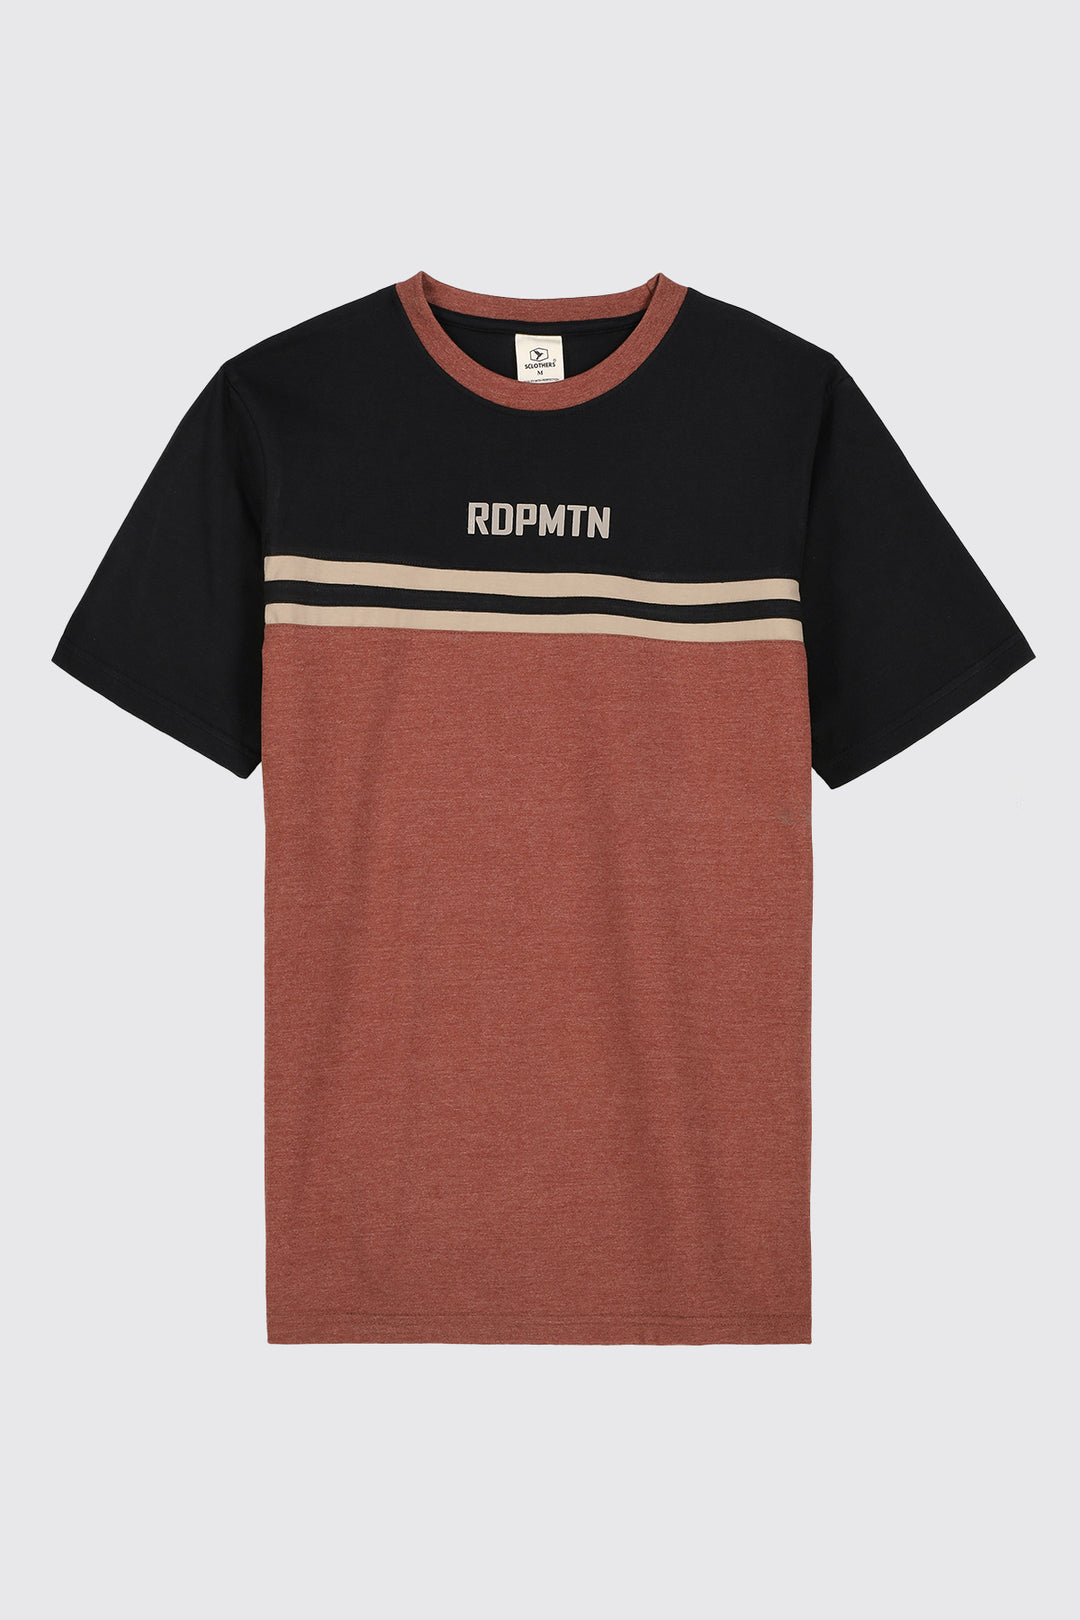 Redemption Melange Brown Graphic T-Shirt - A23 - MT0290R